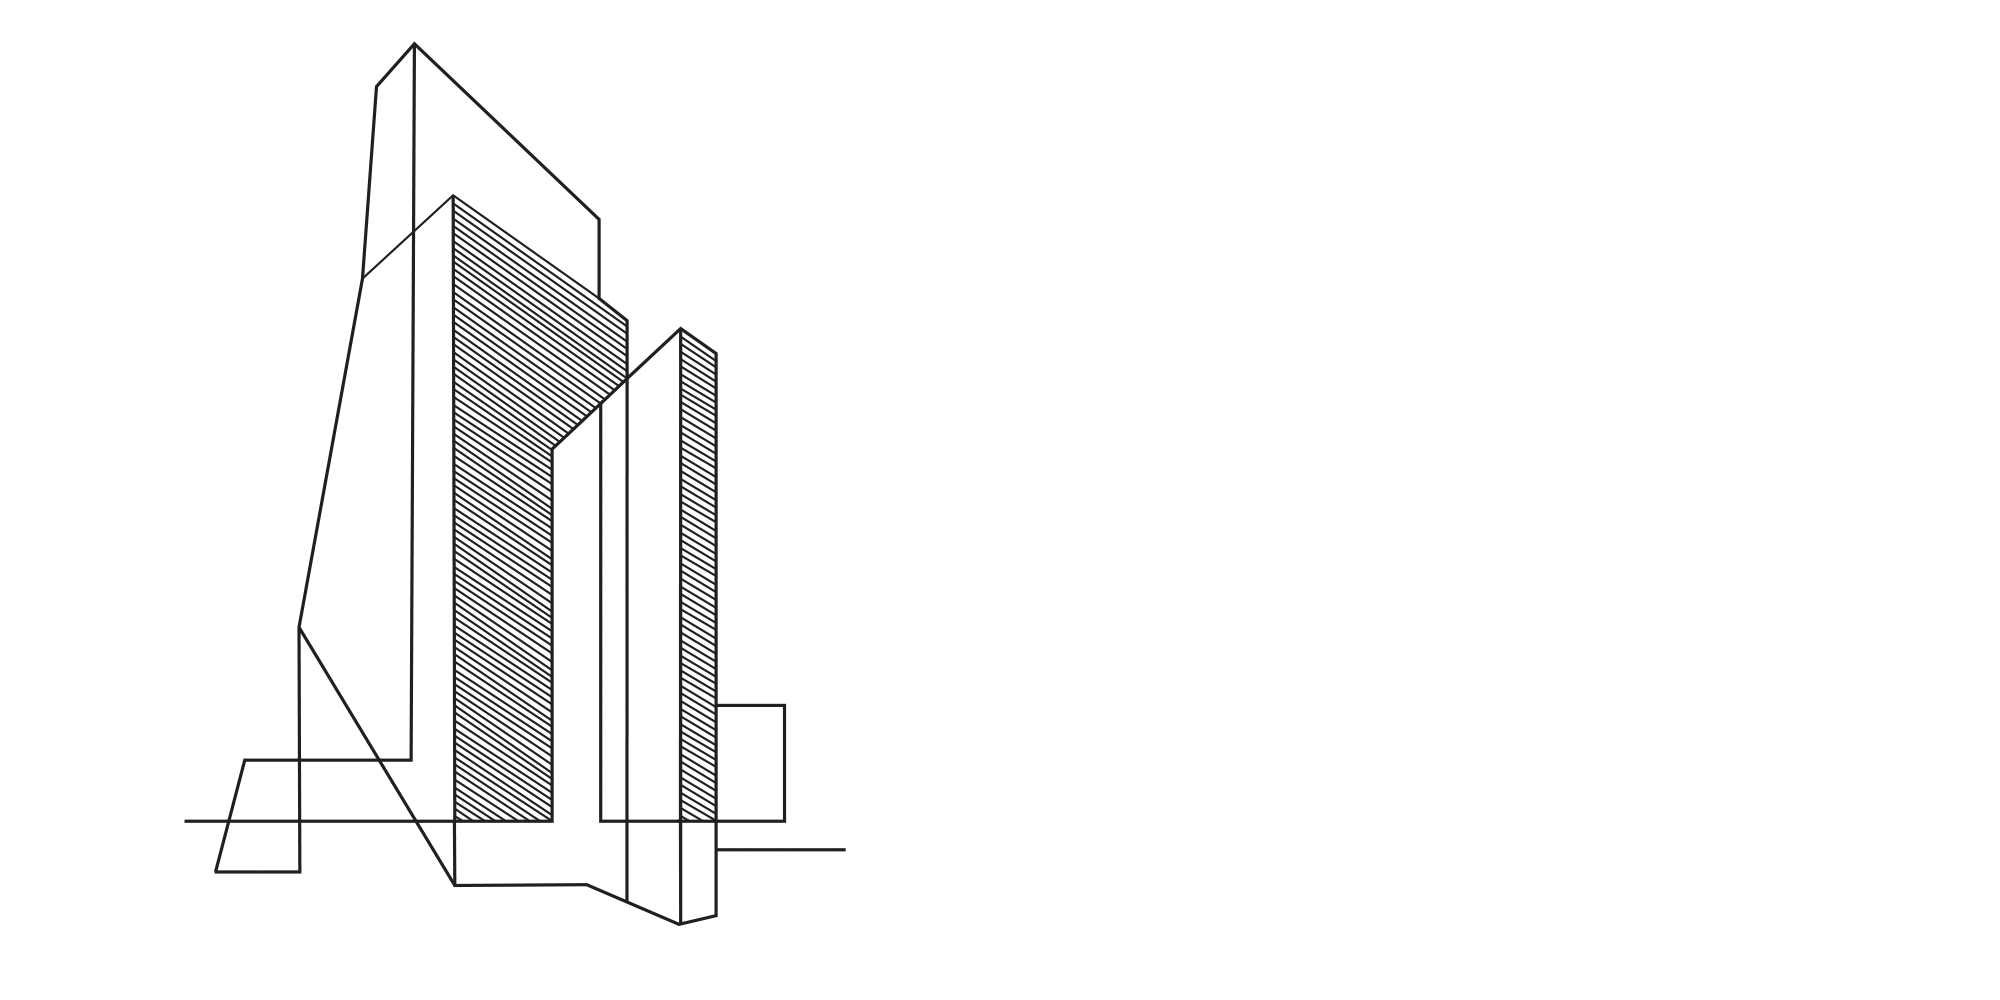 Abdul Kareem Associates